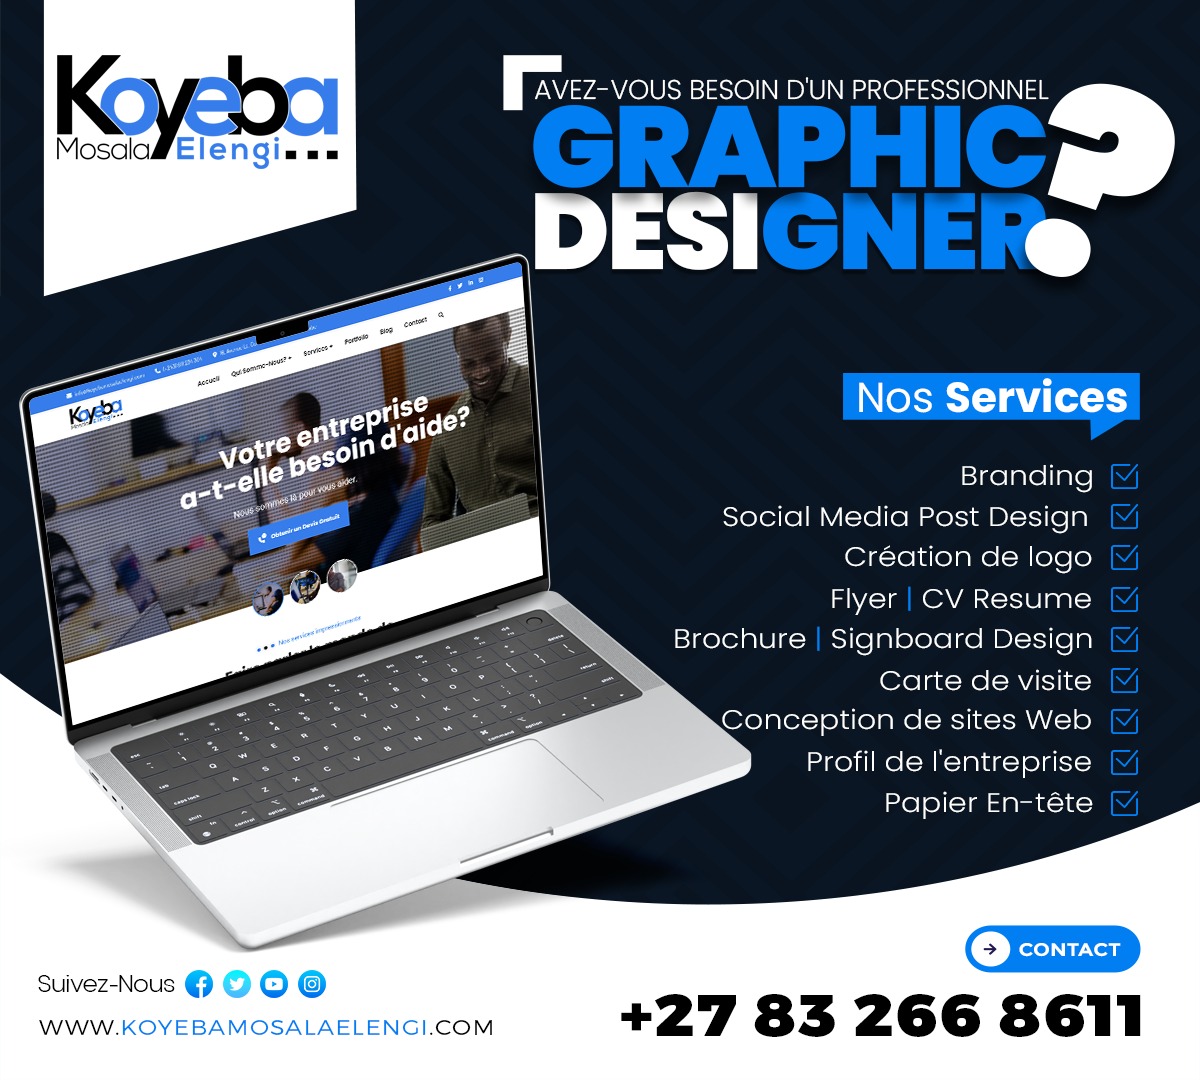 Koyeba Mosala Elengi👌
Chez c'est la qualité👌
#digitalart #DigitalArtist #GraphicDesign #digitalmarketing #marketingagency #marketingbusiness #GraphicDesigner